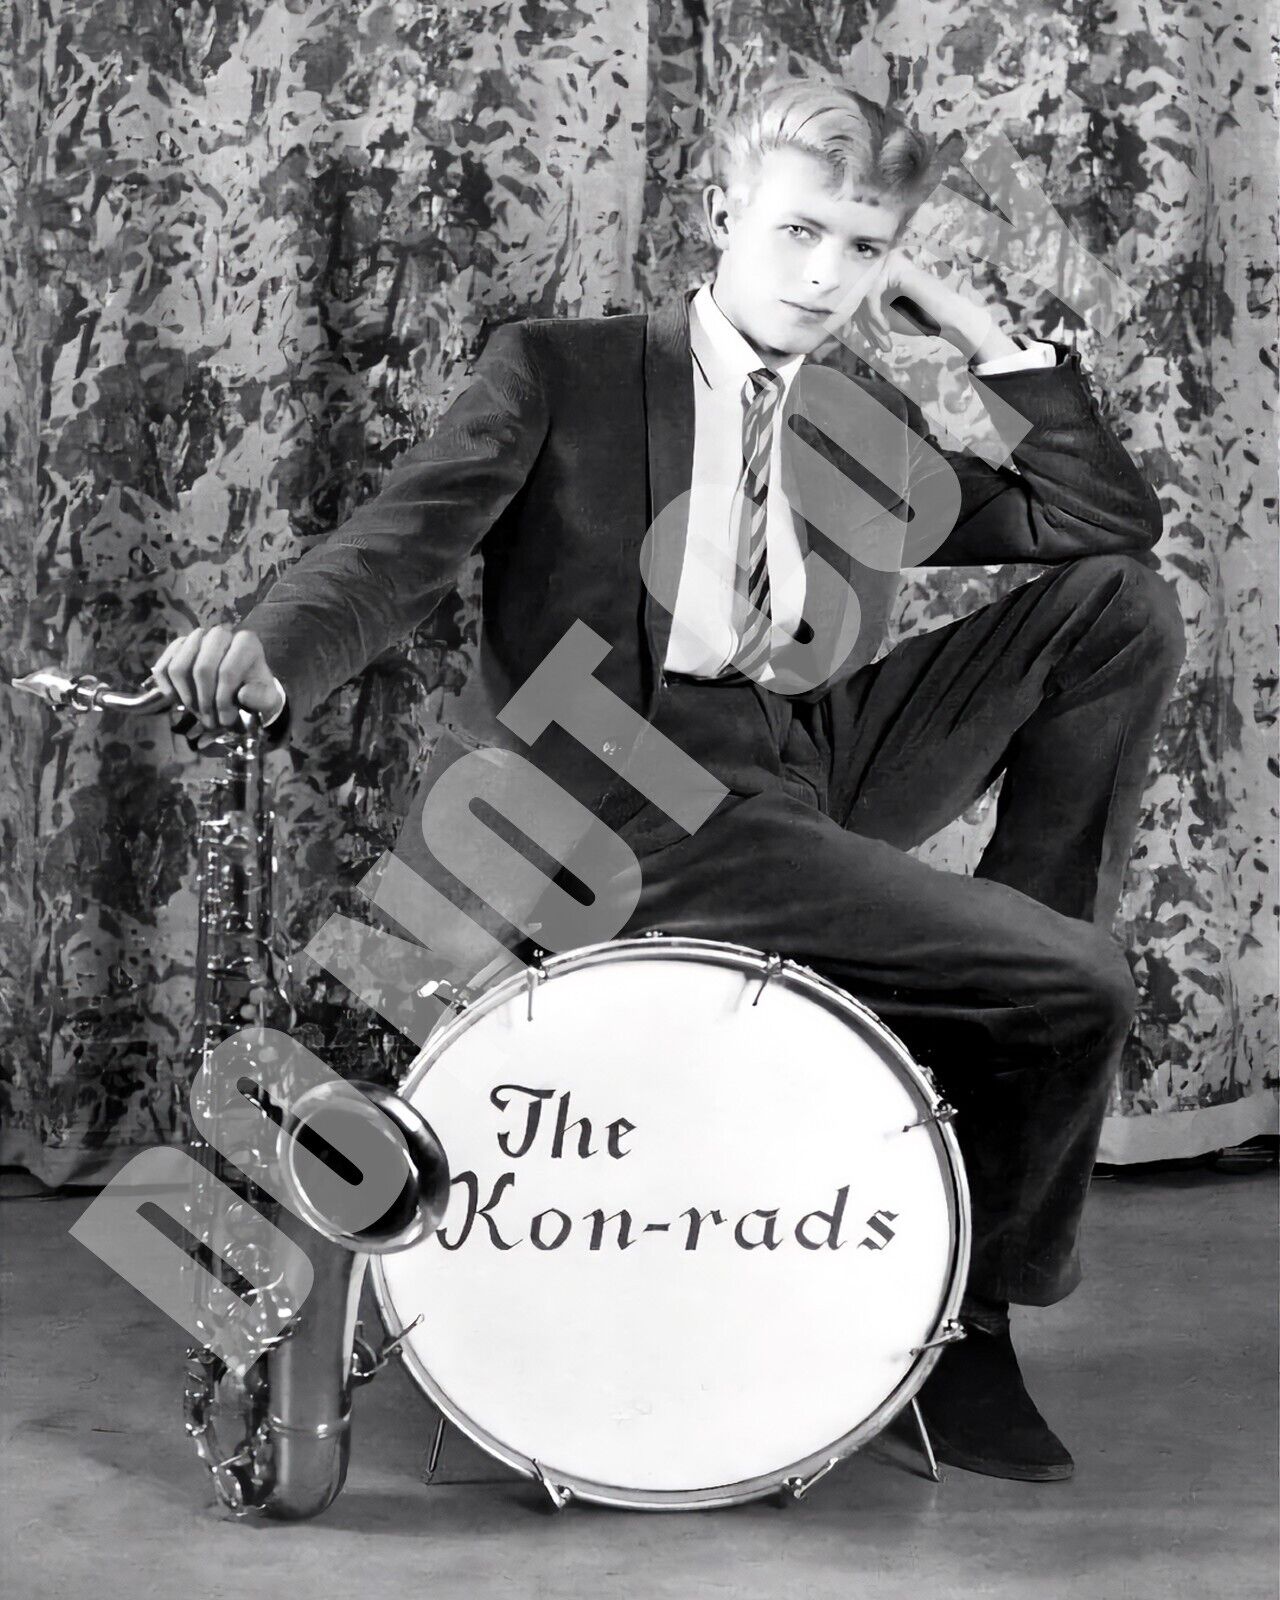 1963 Before David Bowie He was Davie Jones 1st Band Non-rads 8x10 Photo